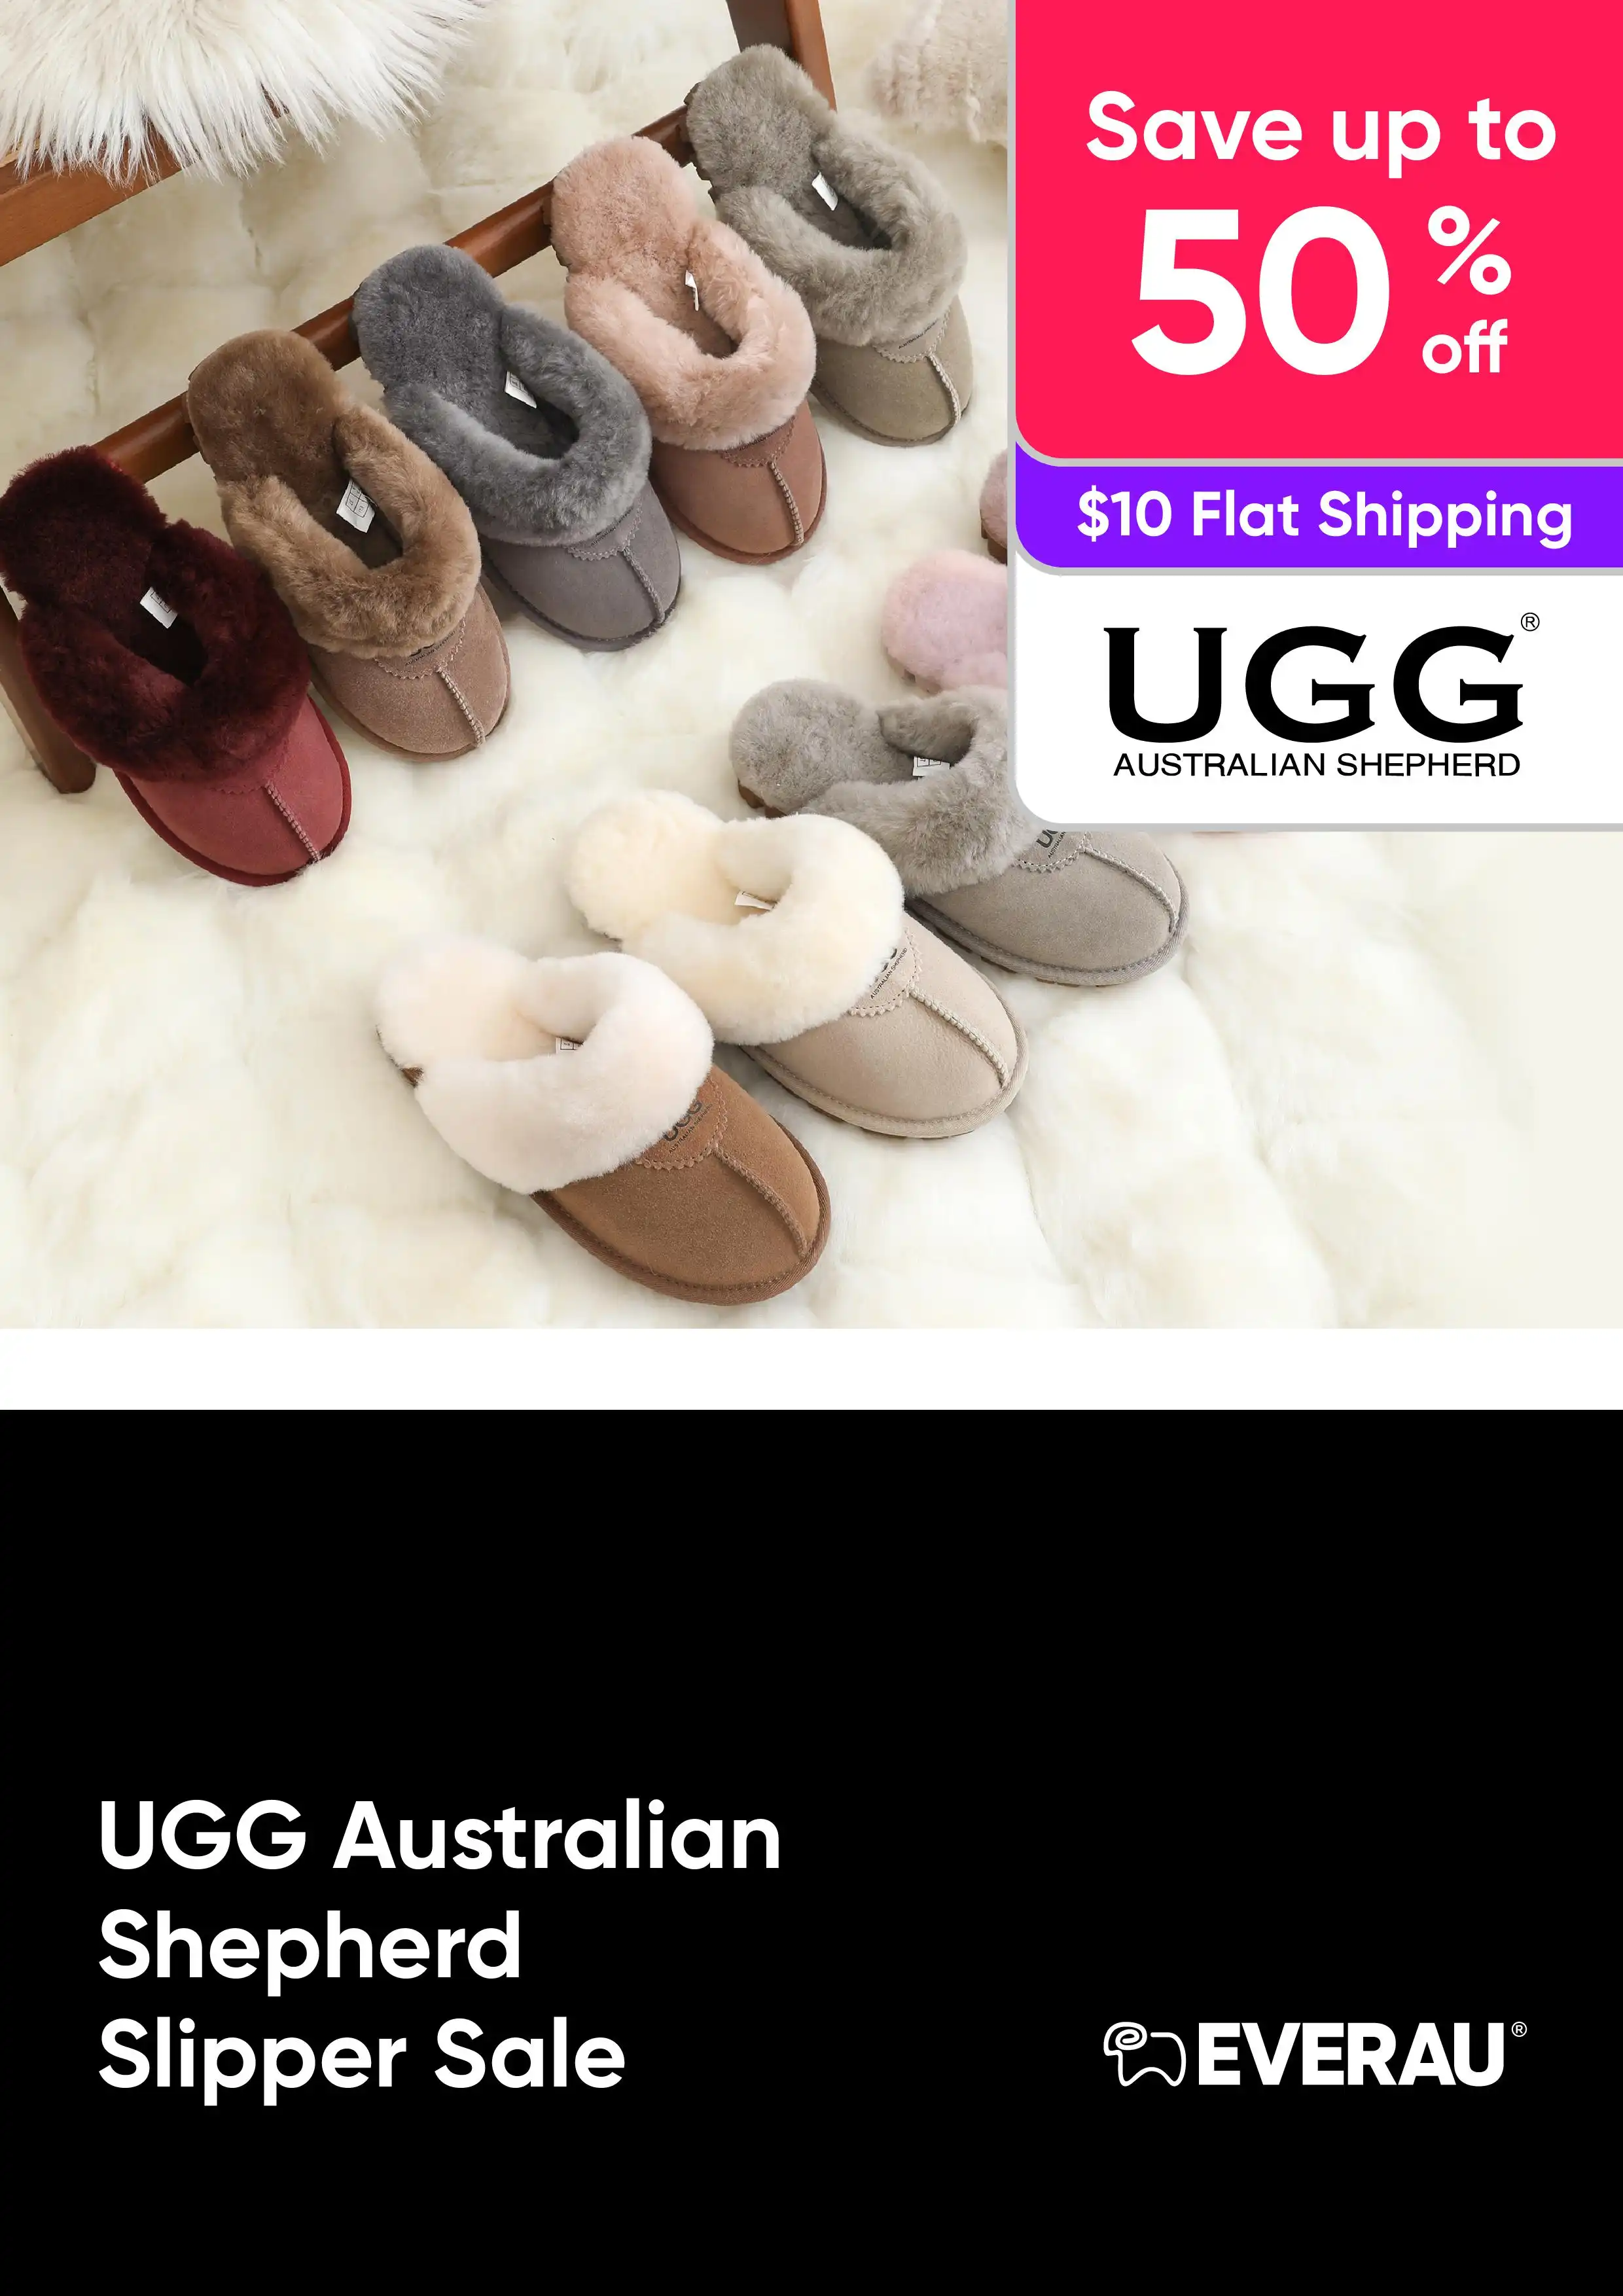 UGG Australian Shepherd Slipper Sale - Up to 50% Off